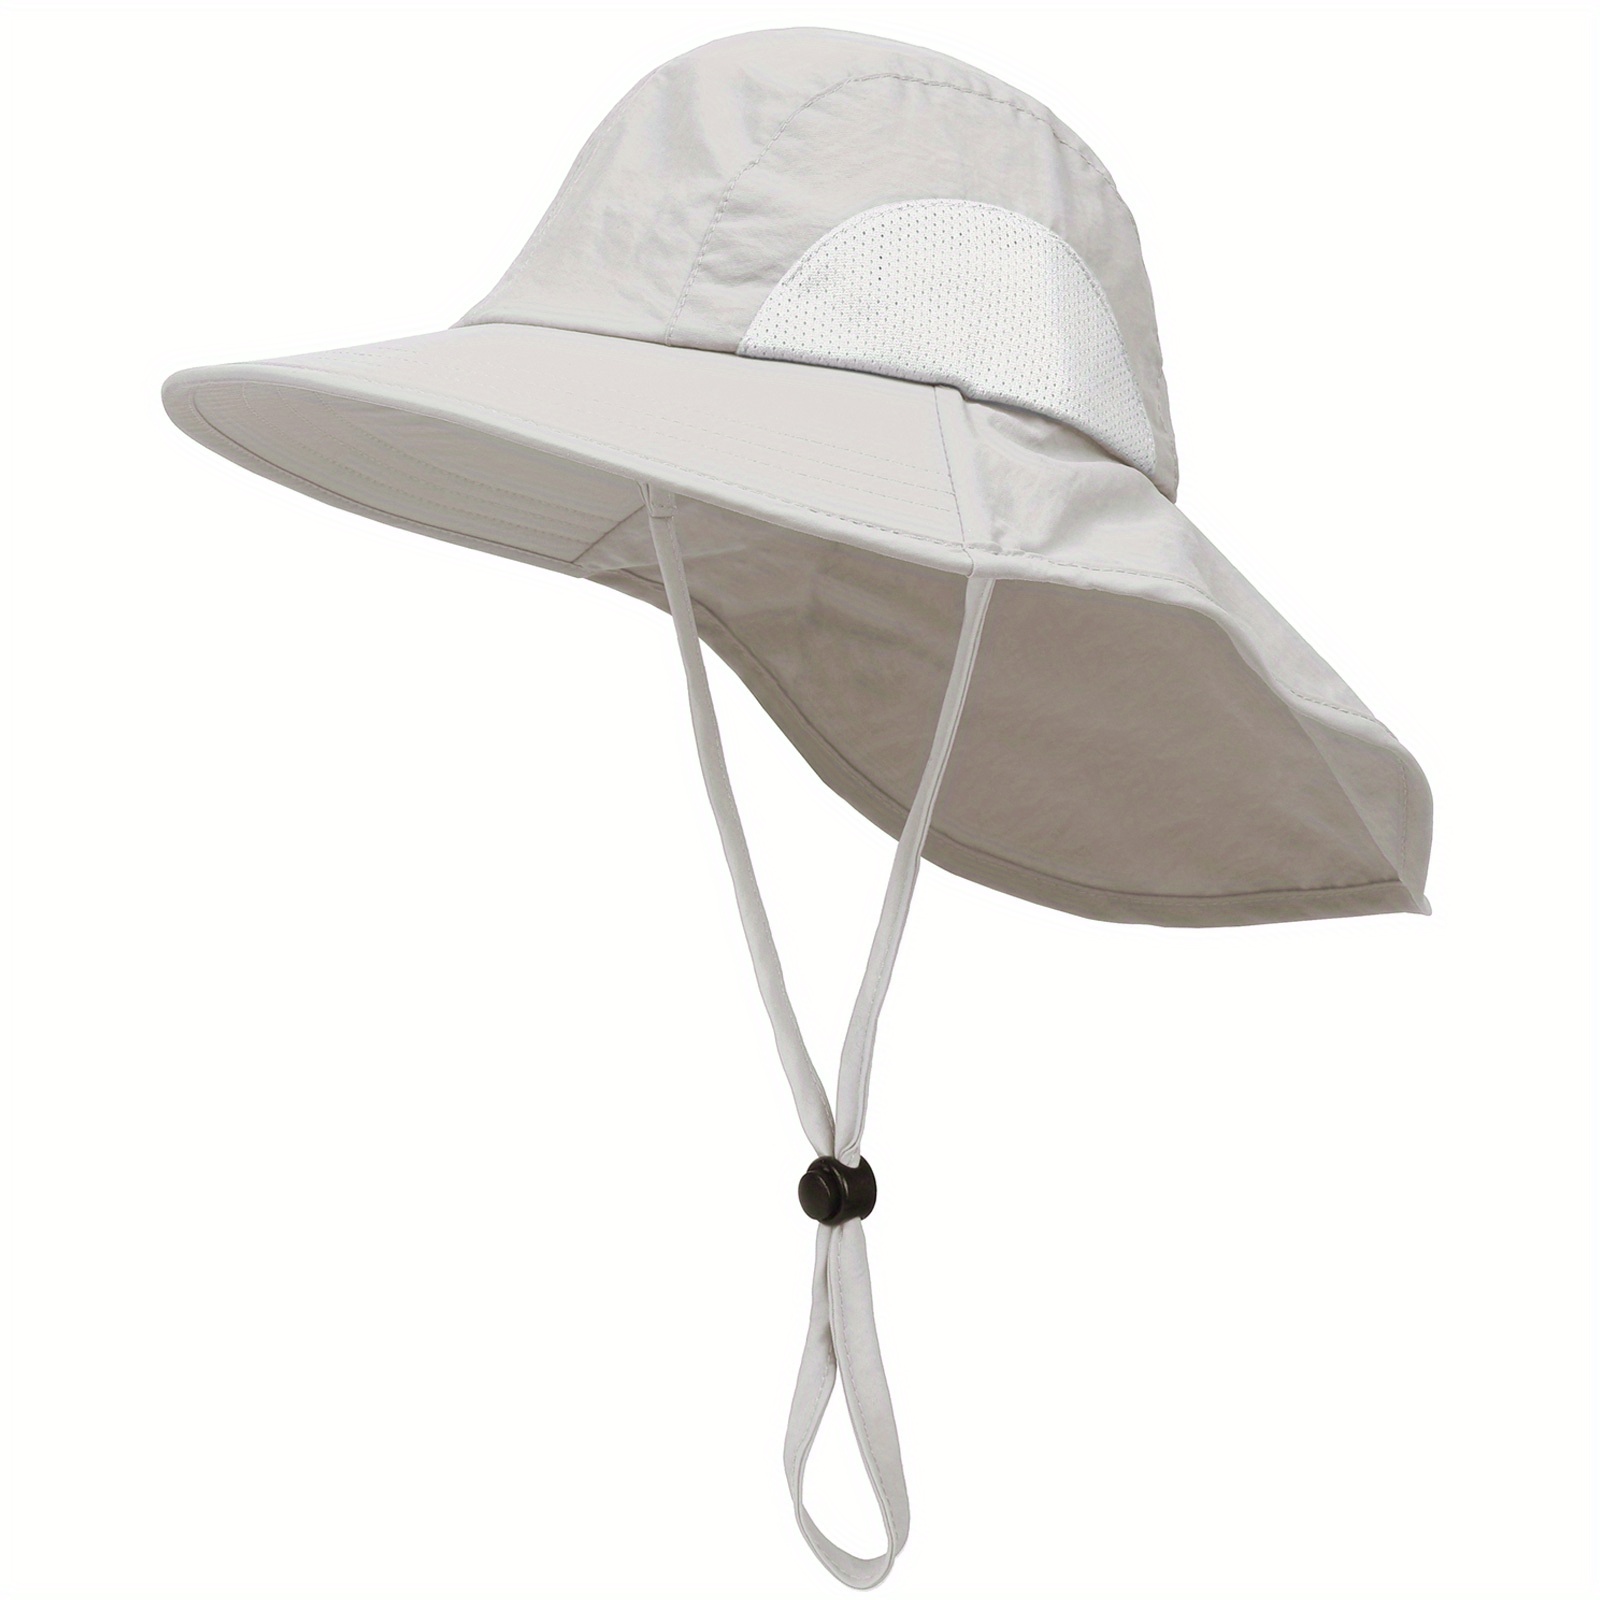 Kids Sun Hat Fishing Hats for Boys Sun Hats for Kids Bucket Hat